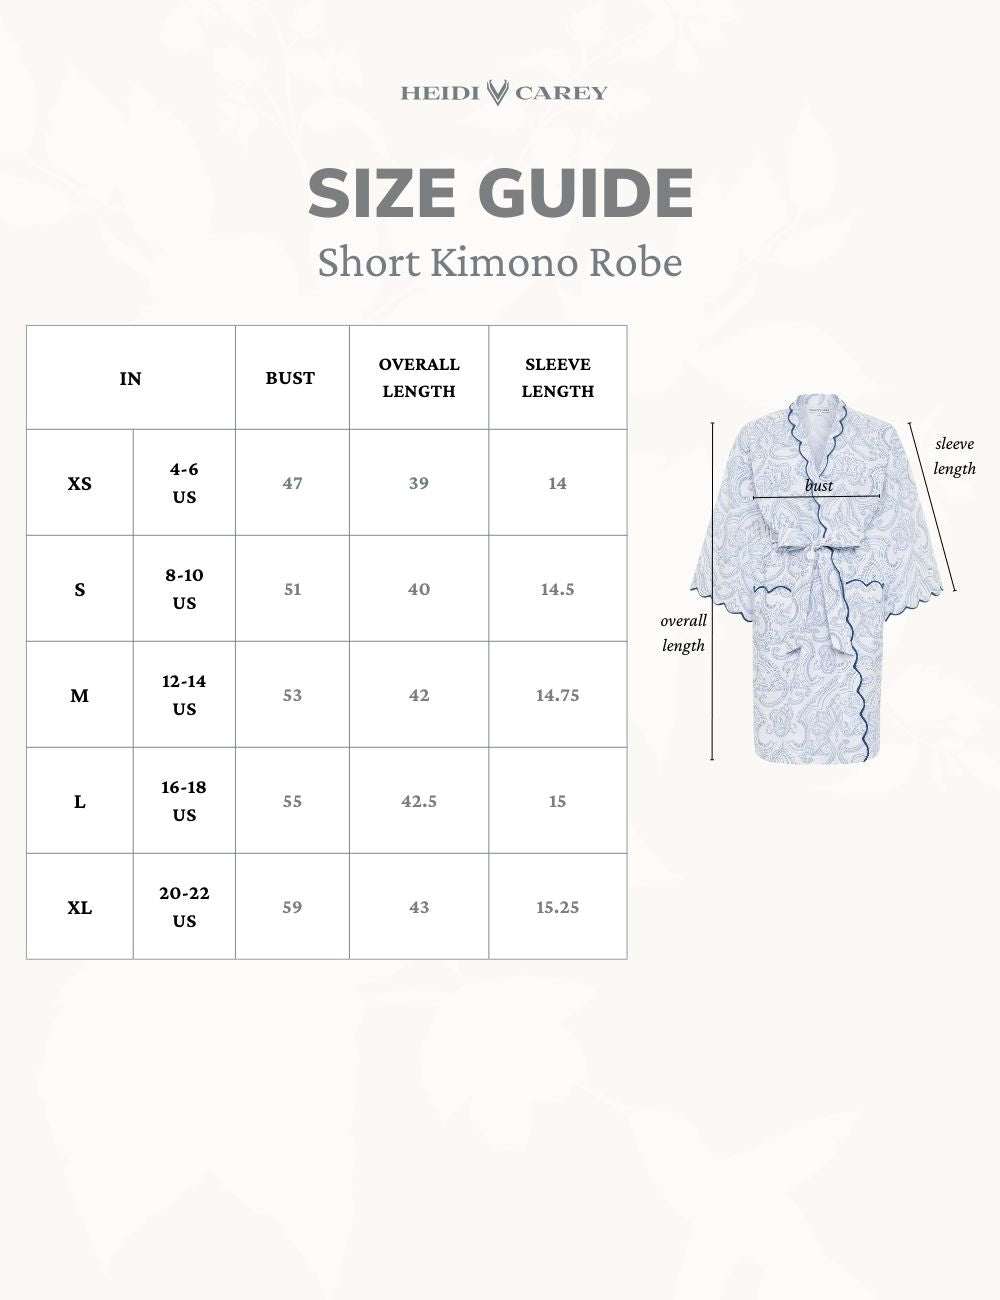 Short Kimono Robes Sizing Guide